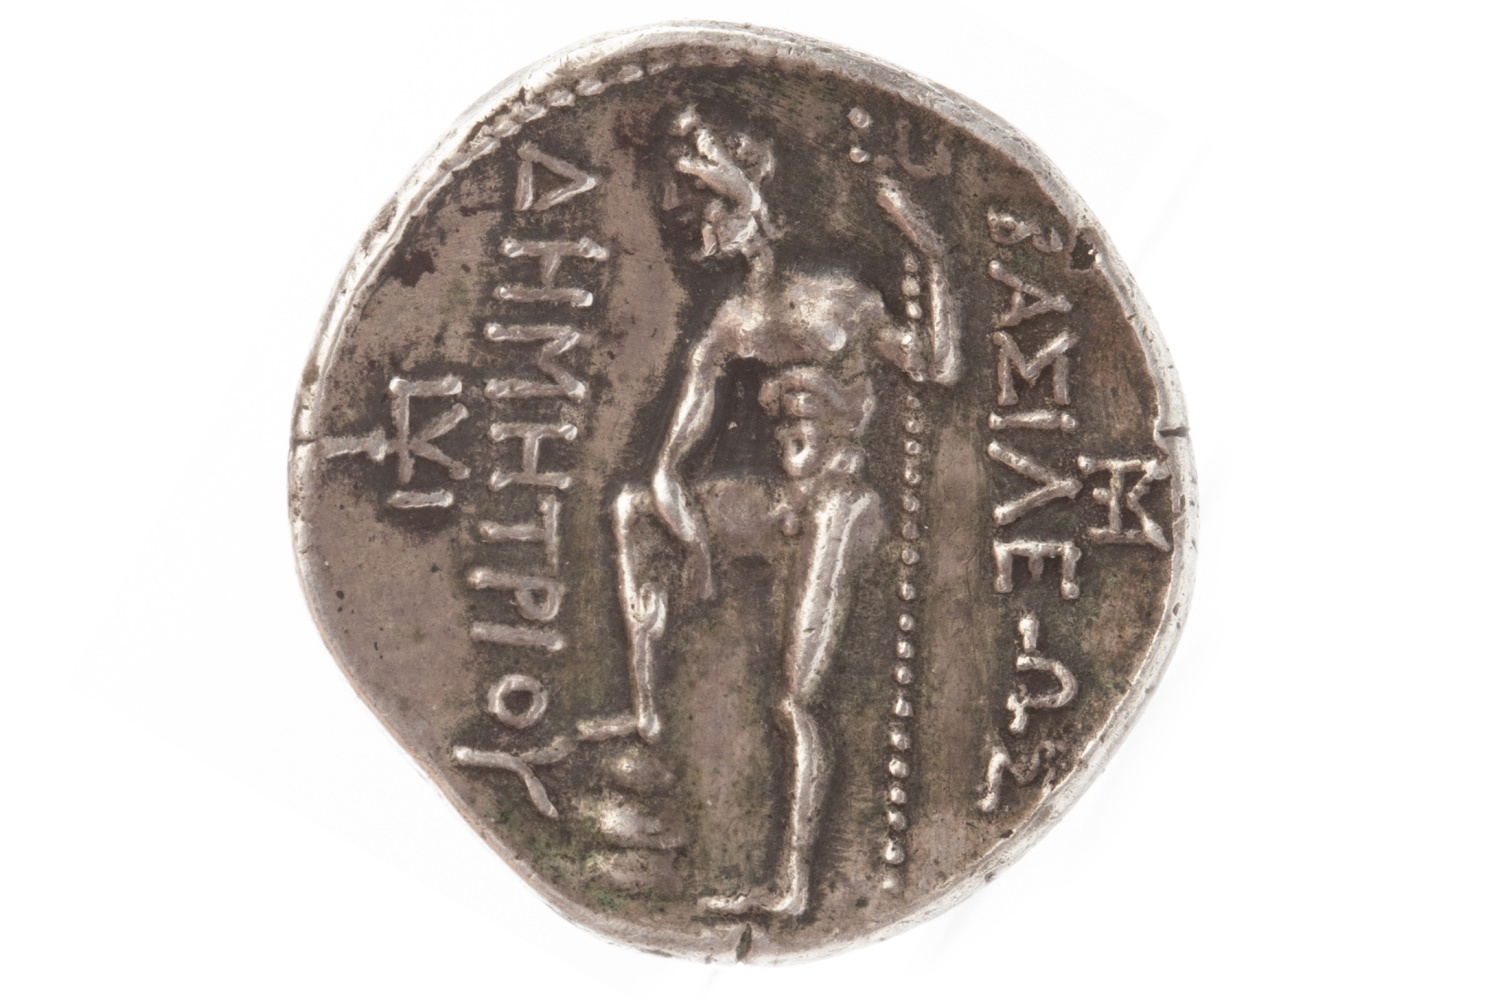 A MACEDONIAN KINGDOM SILVER TETRADRACHM COIN